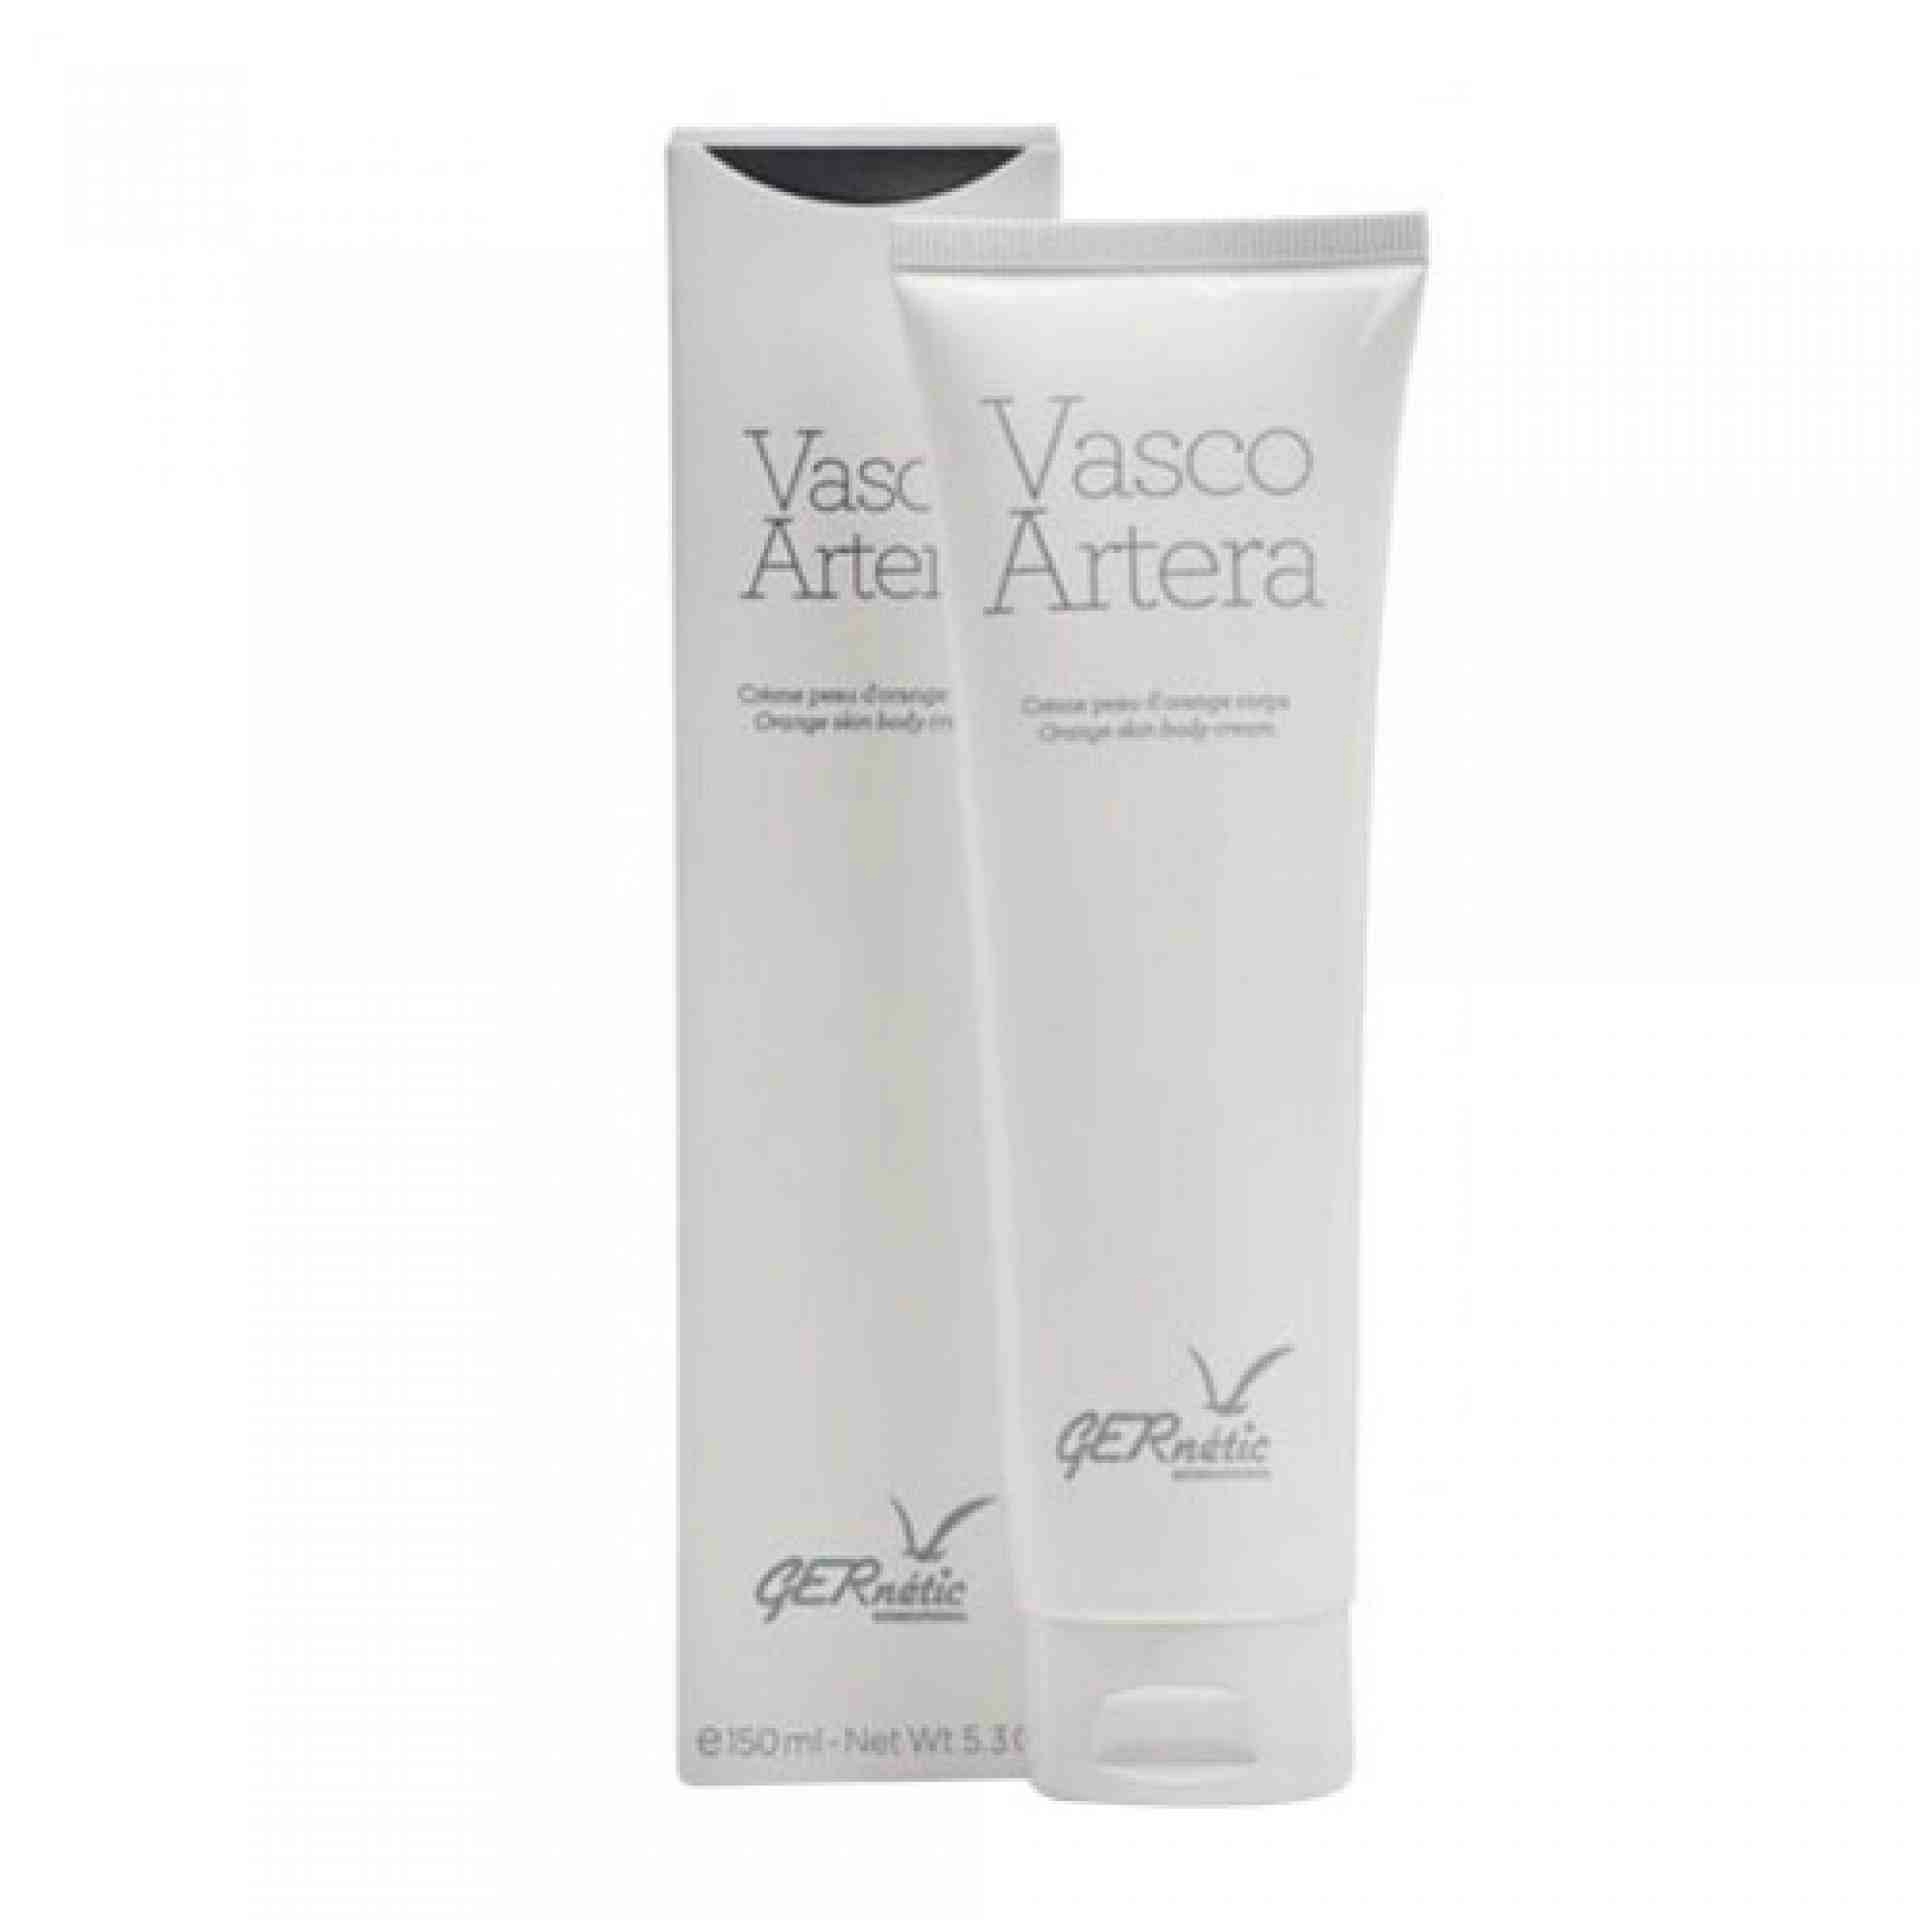 Vasco Artera | Crema anti-celulitis 150ml - Gernetic ®